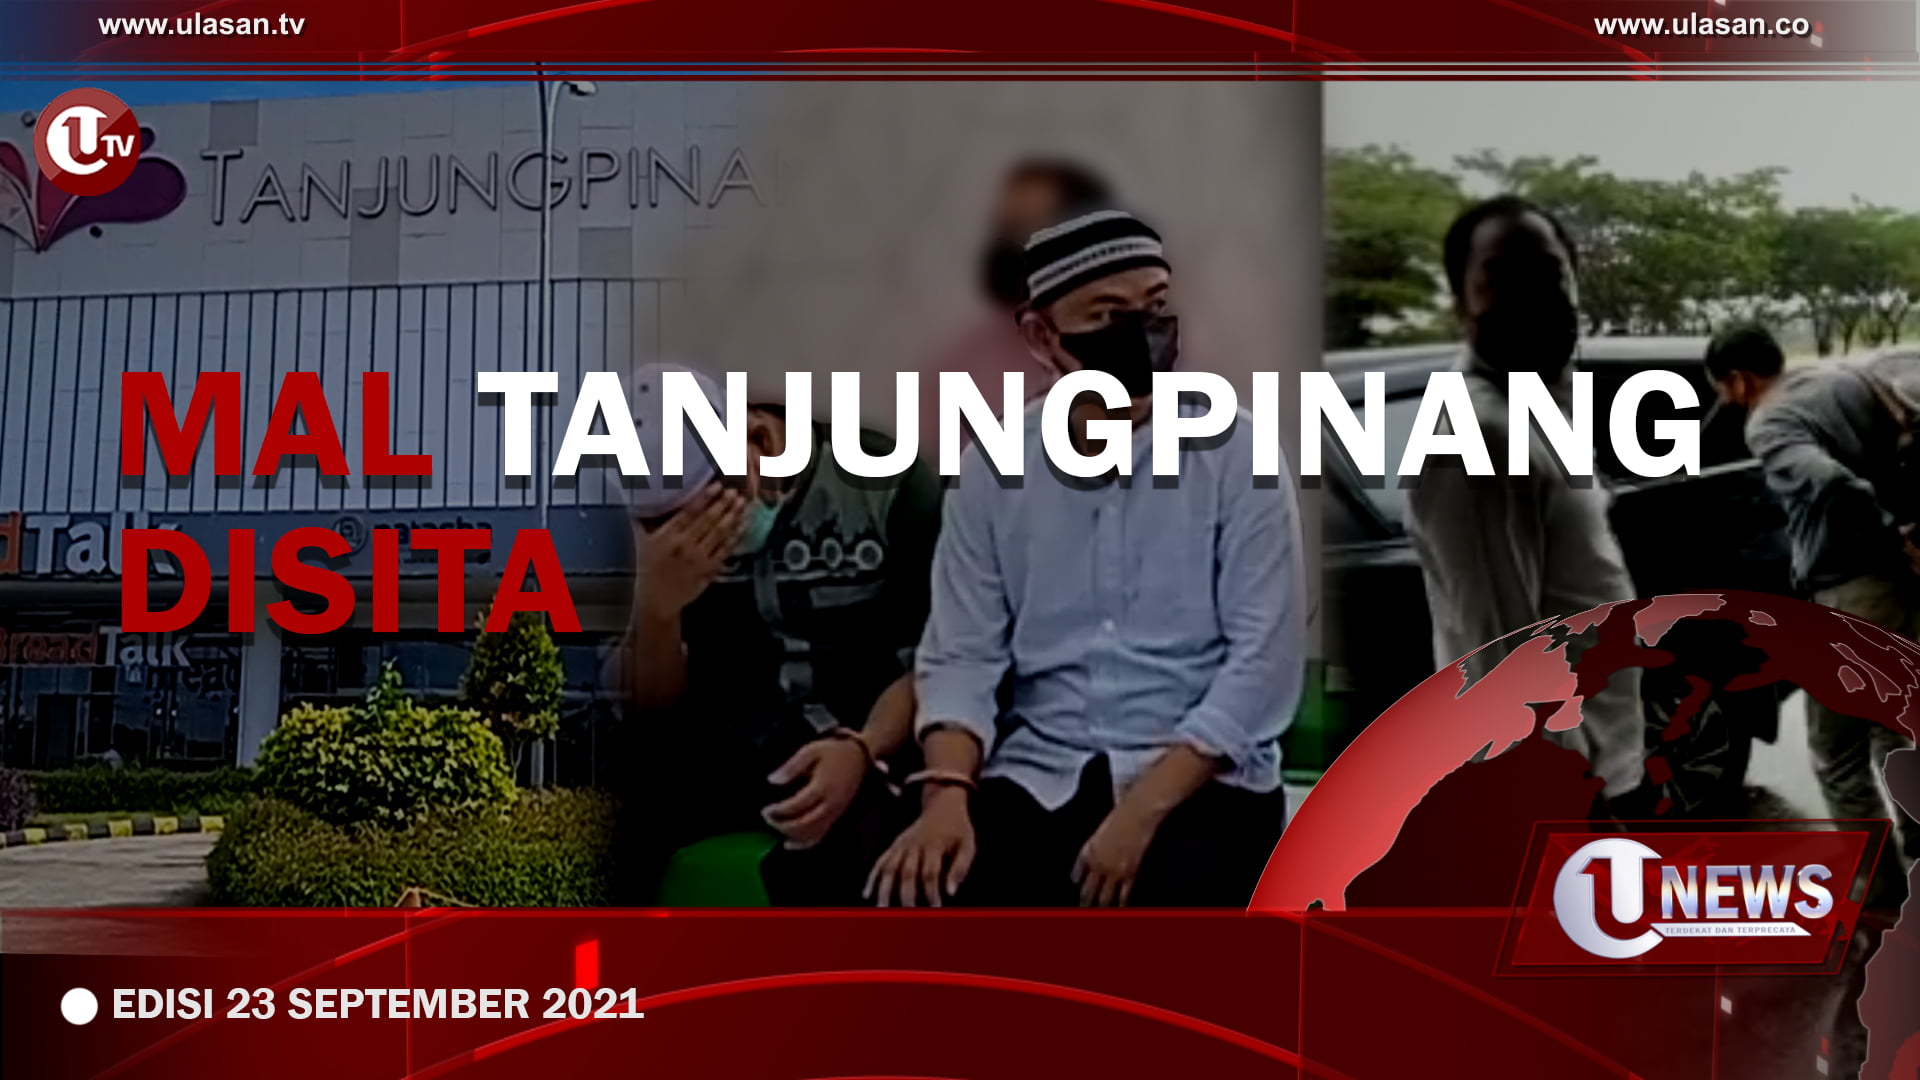 [U-NEWS] Mal Tanjungpinang Disita | U-NEWS EDISI 23 SEPTEMBER 2021